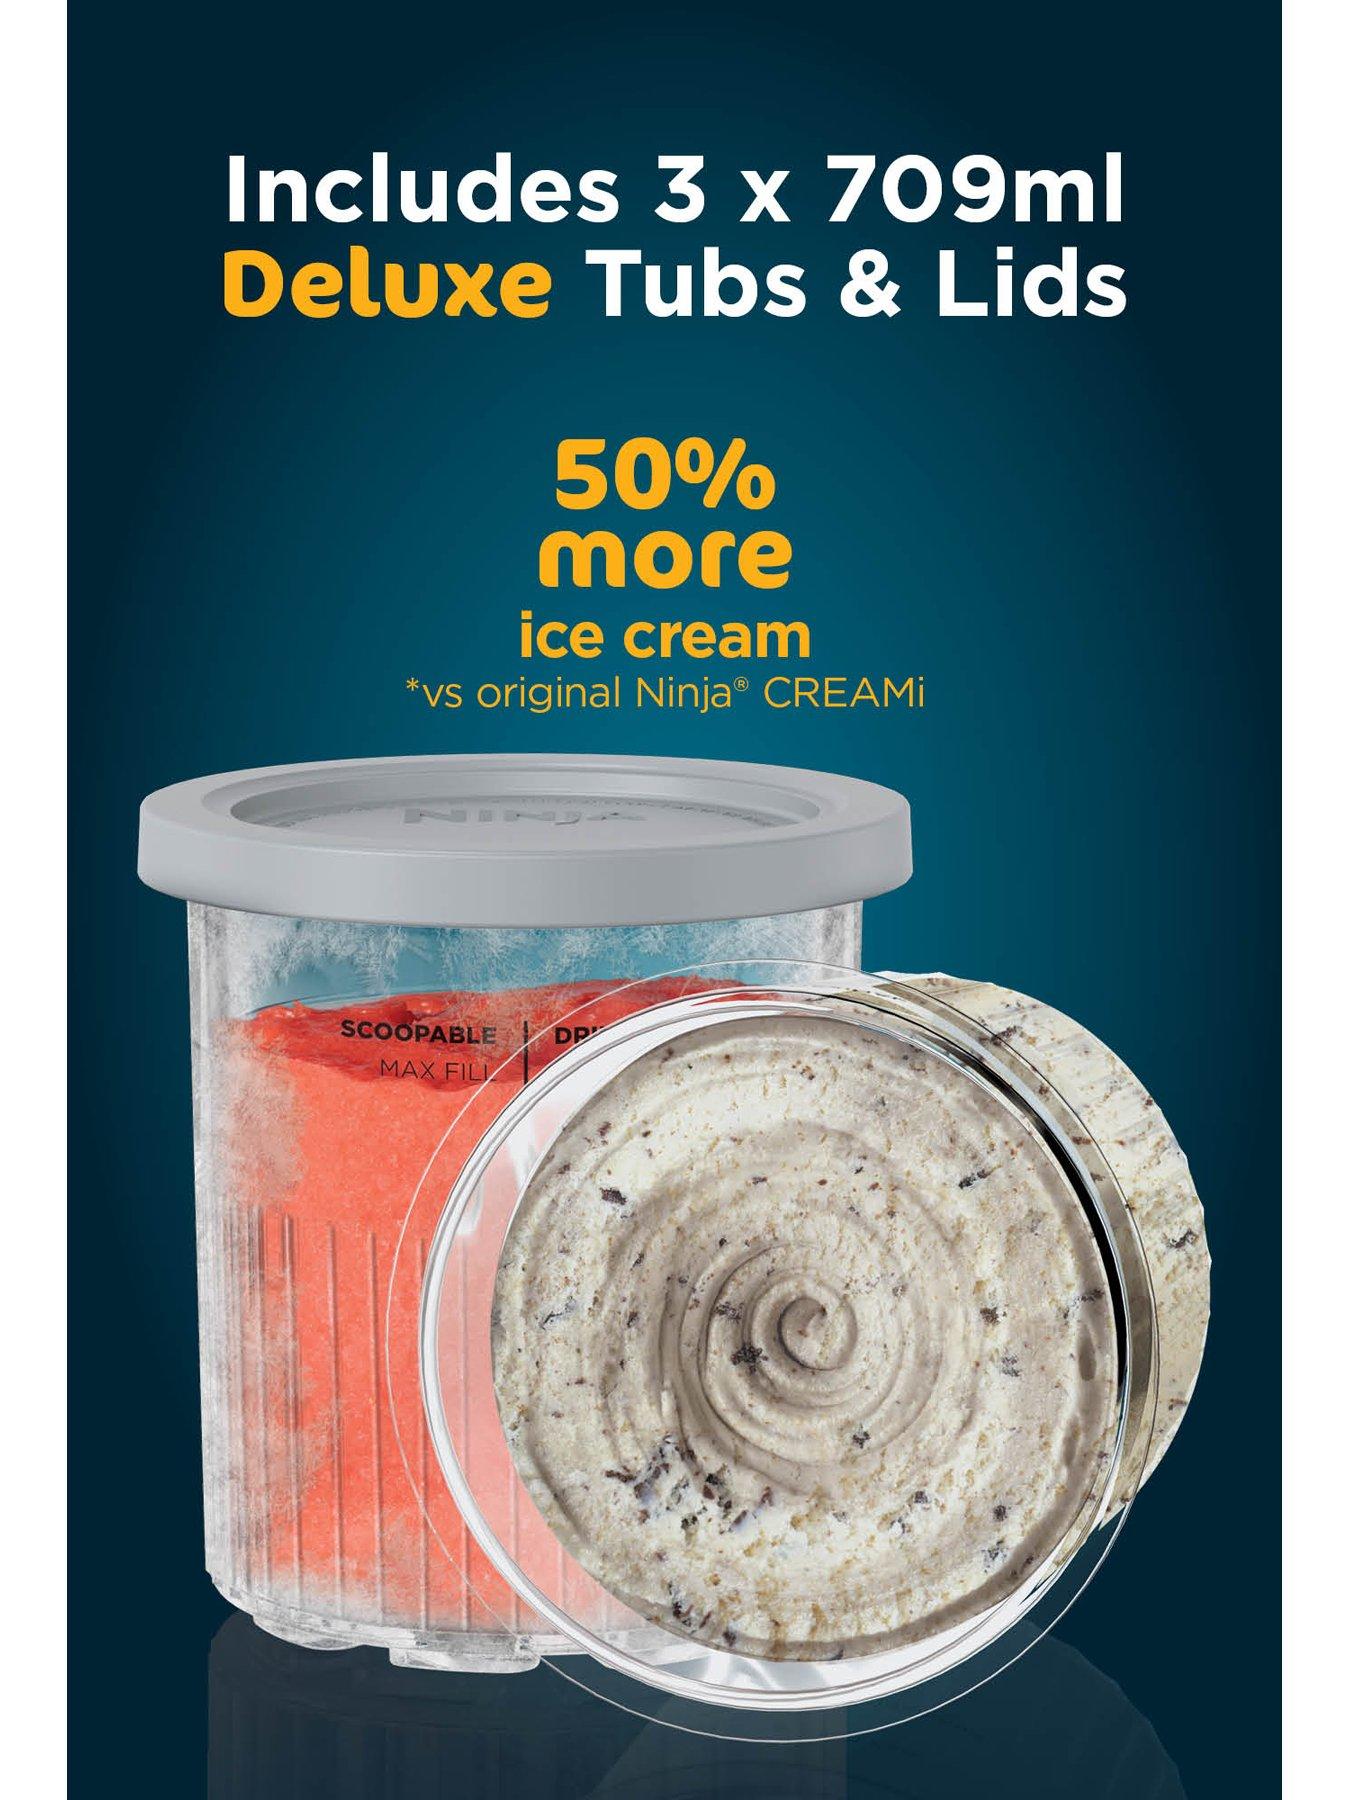 CREAMi Deluxe Ice Cream and Frozen Treat Maker - NC501UK